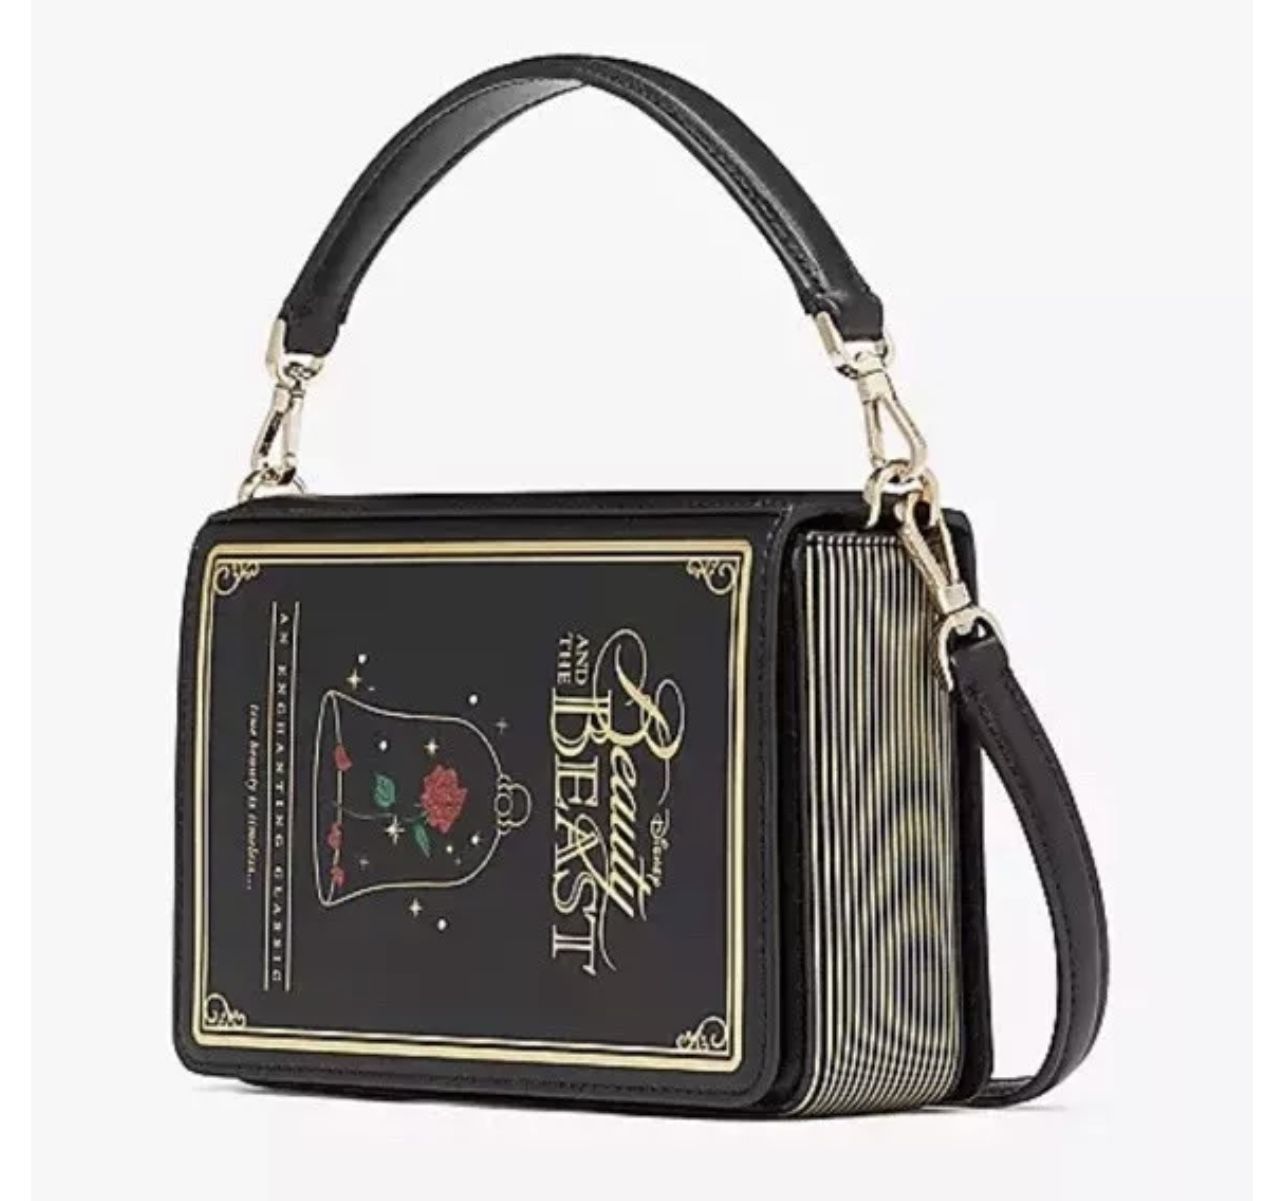 Limited Edition Brand New Beauty and the Beast Disney Kate Spade crossbody handbag purse in La Jolla 